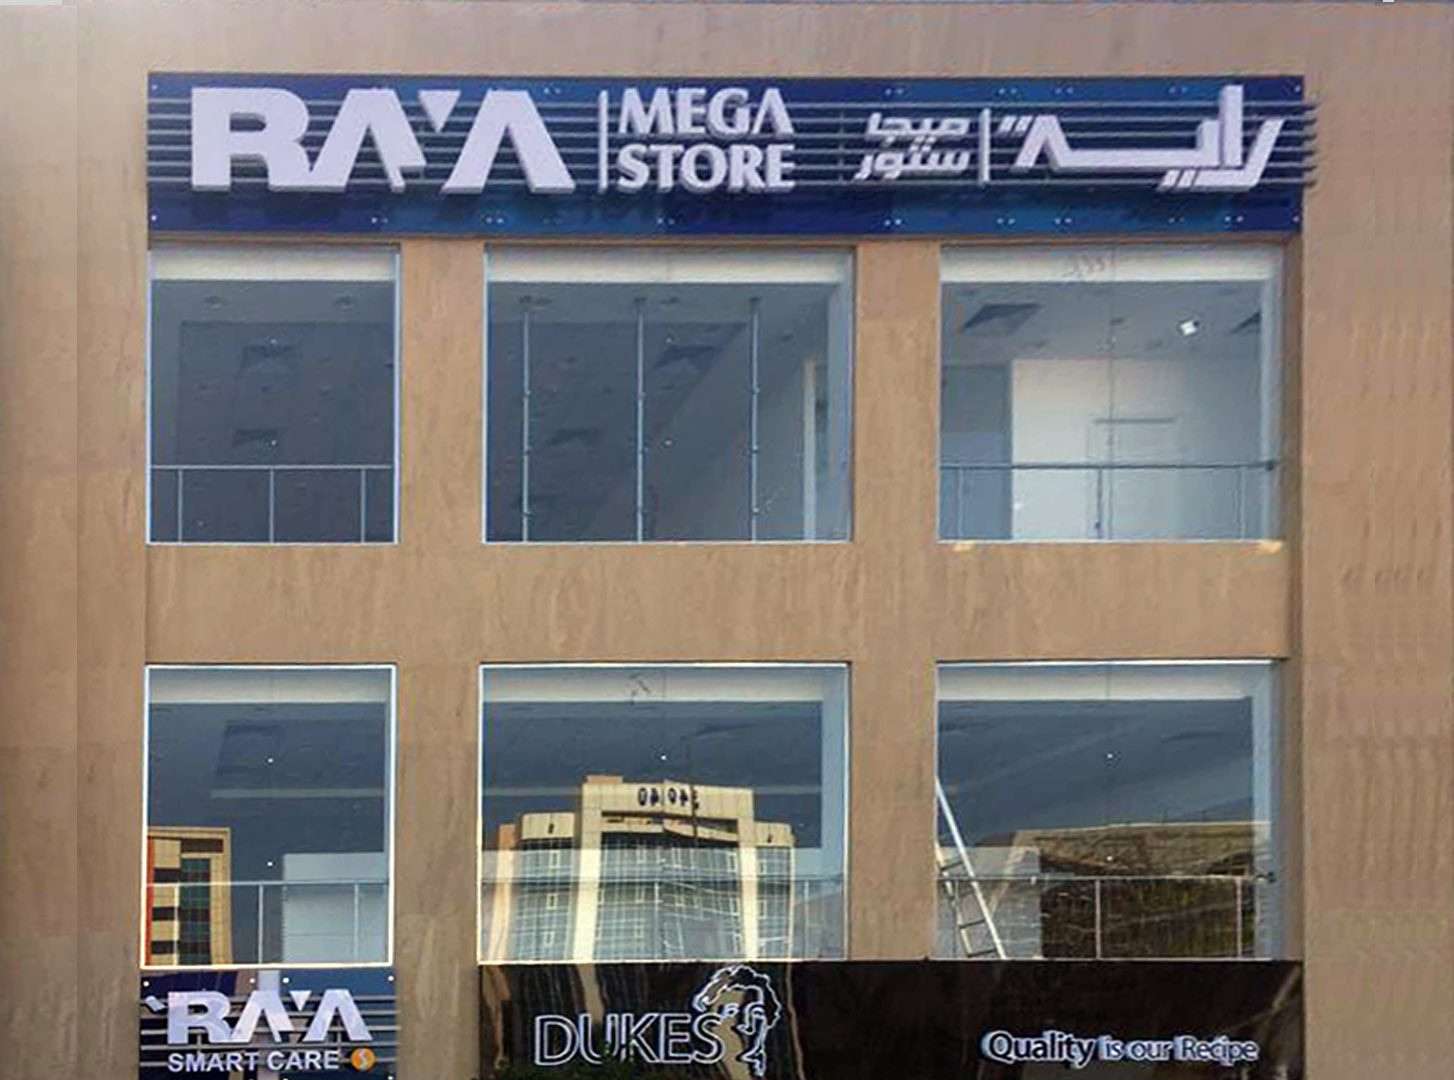 RAYA Mega Store - Concord